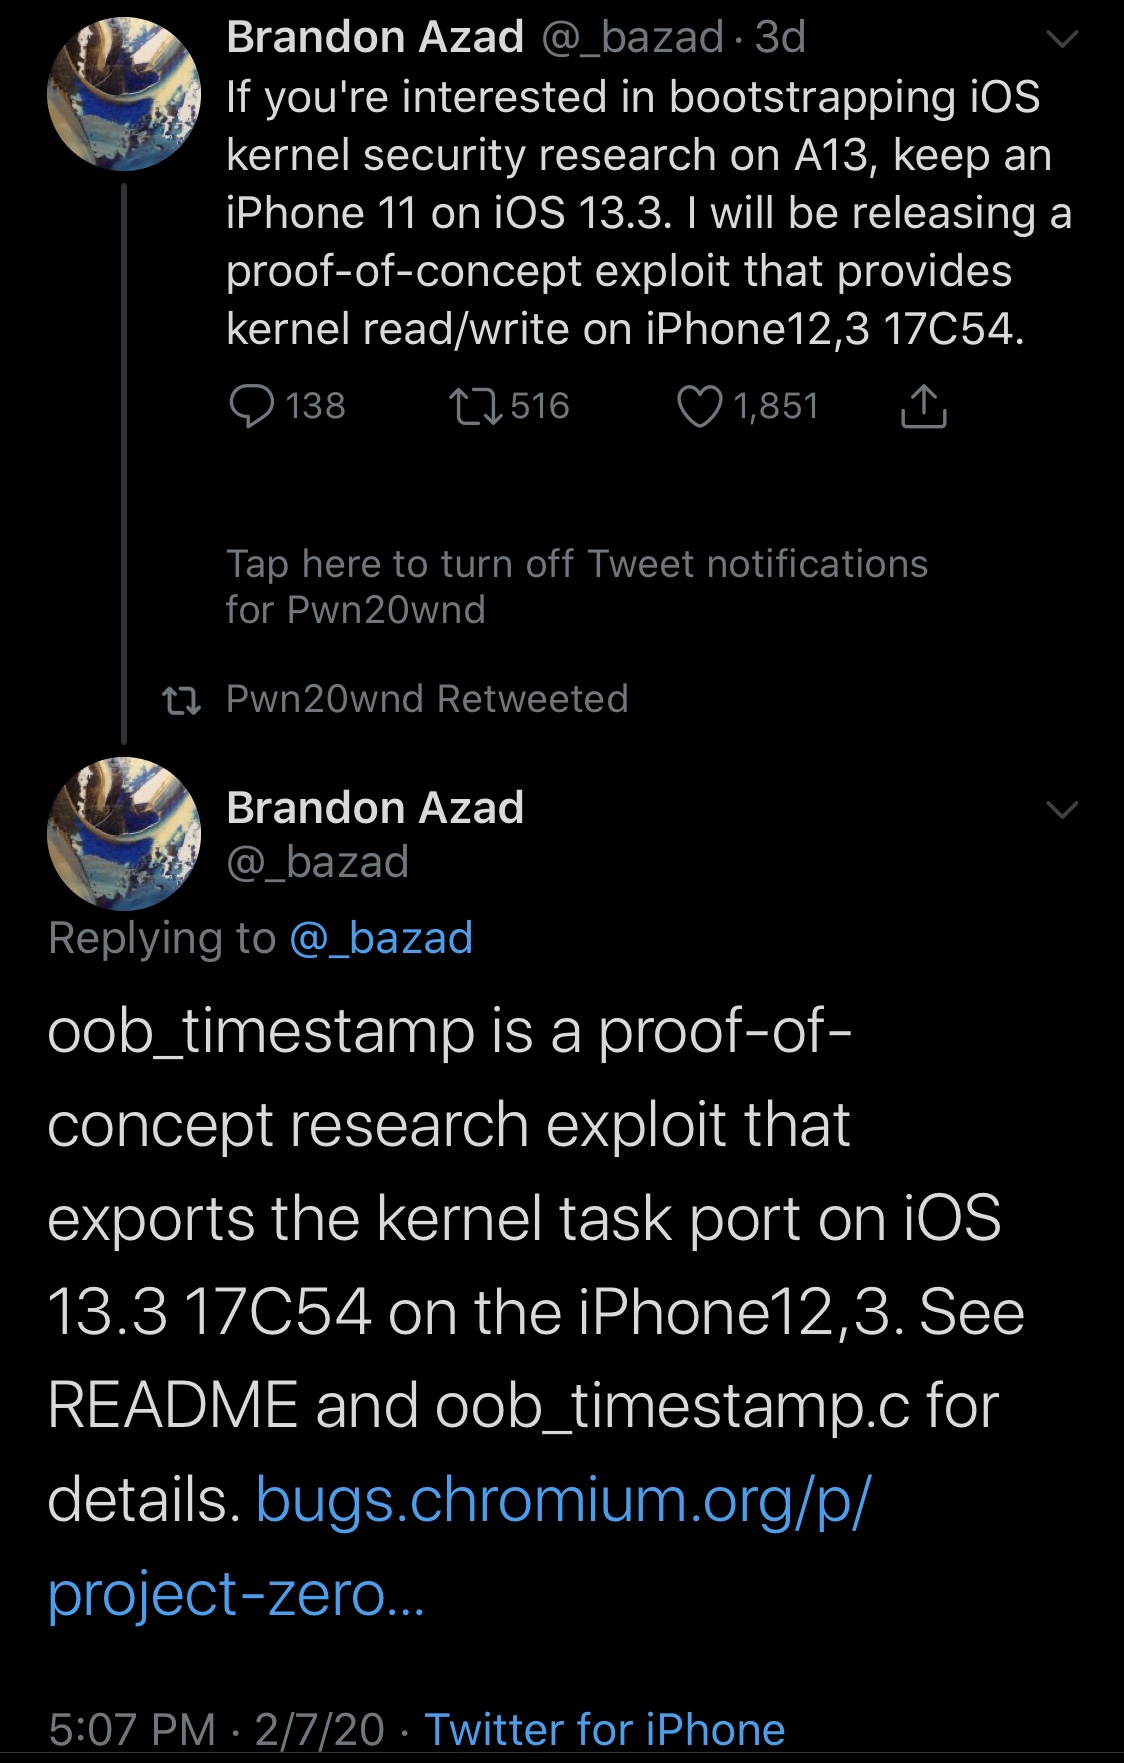 Brandon Azad secara resmi merilis exploit Timestamp OOB untuk iOS 13.0-13.3 3